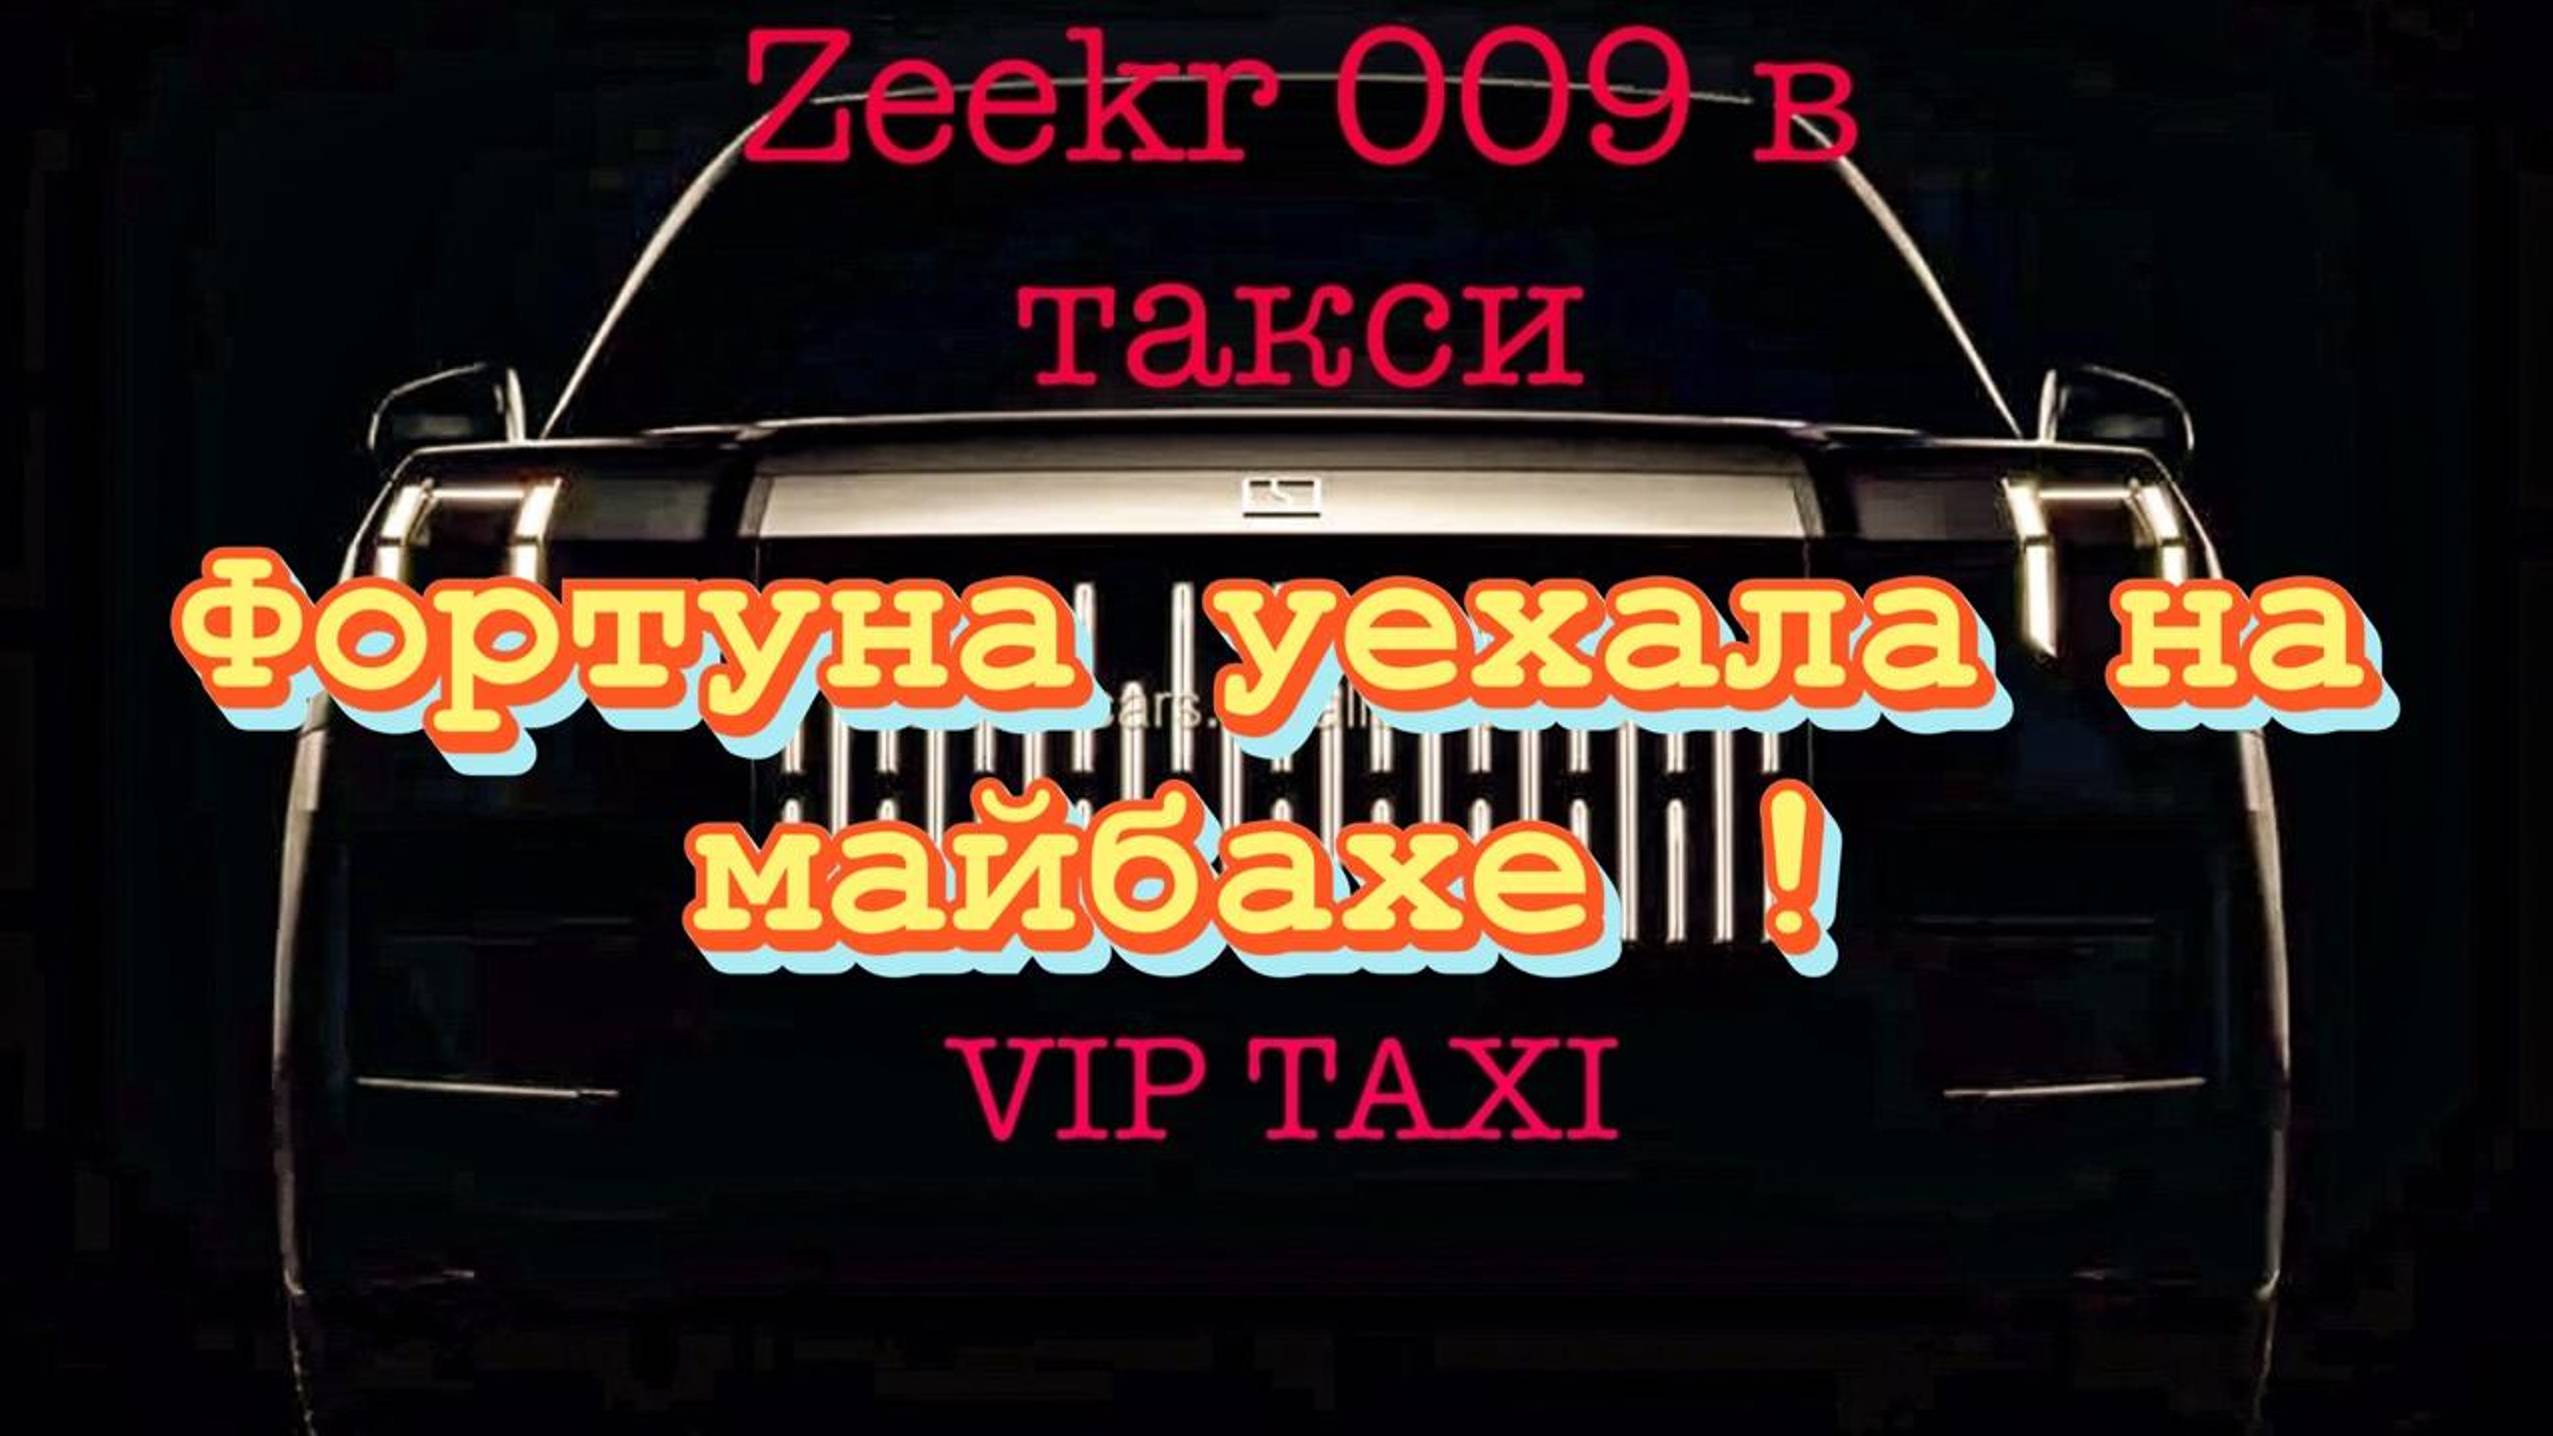 вторник  /таксую на zeekr009/elite taxi/яндекс такси#elite #taxi #vip #zeekr #yandextaxi